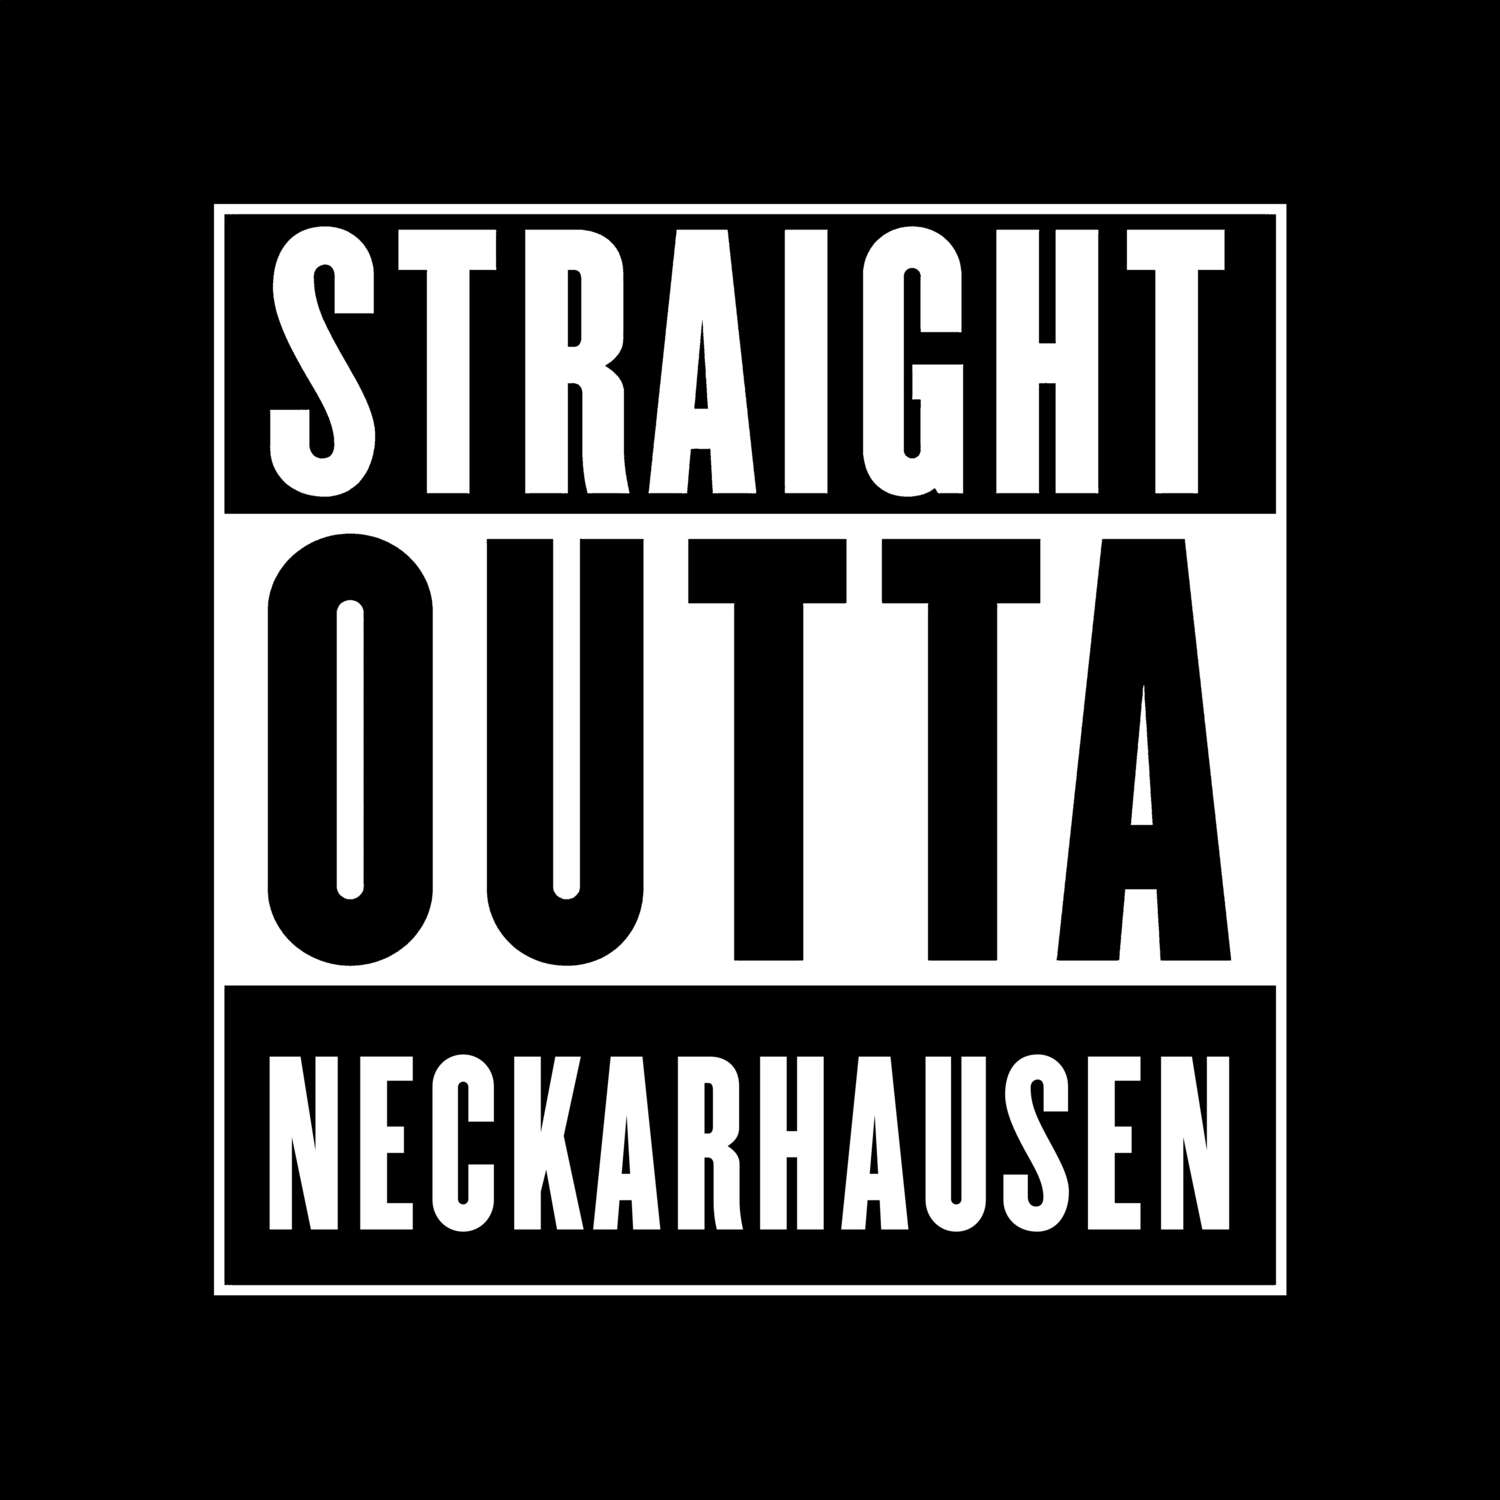 Neckarhausen T-Shirt »Straight Outta«